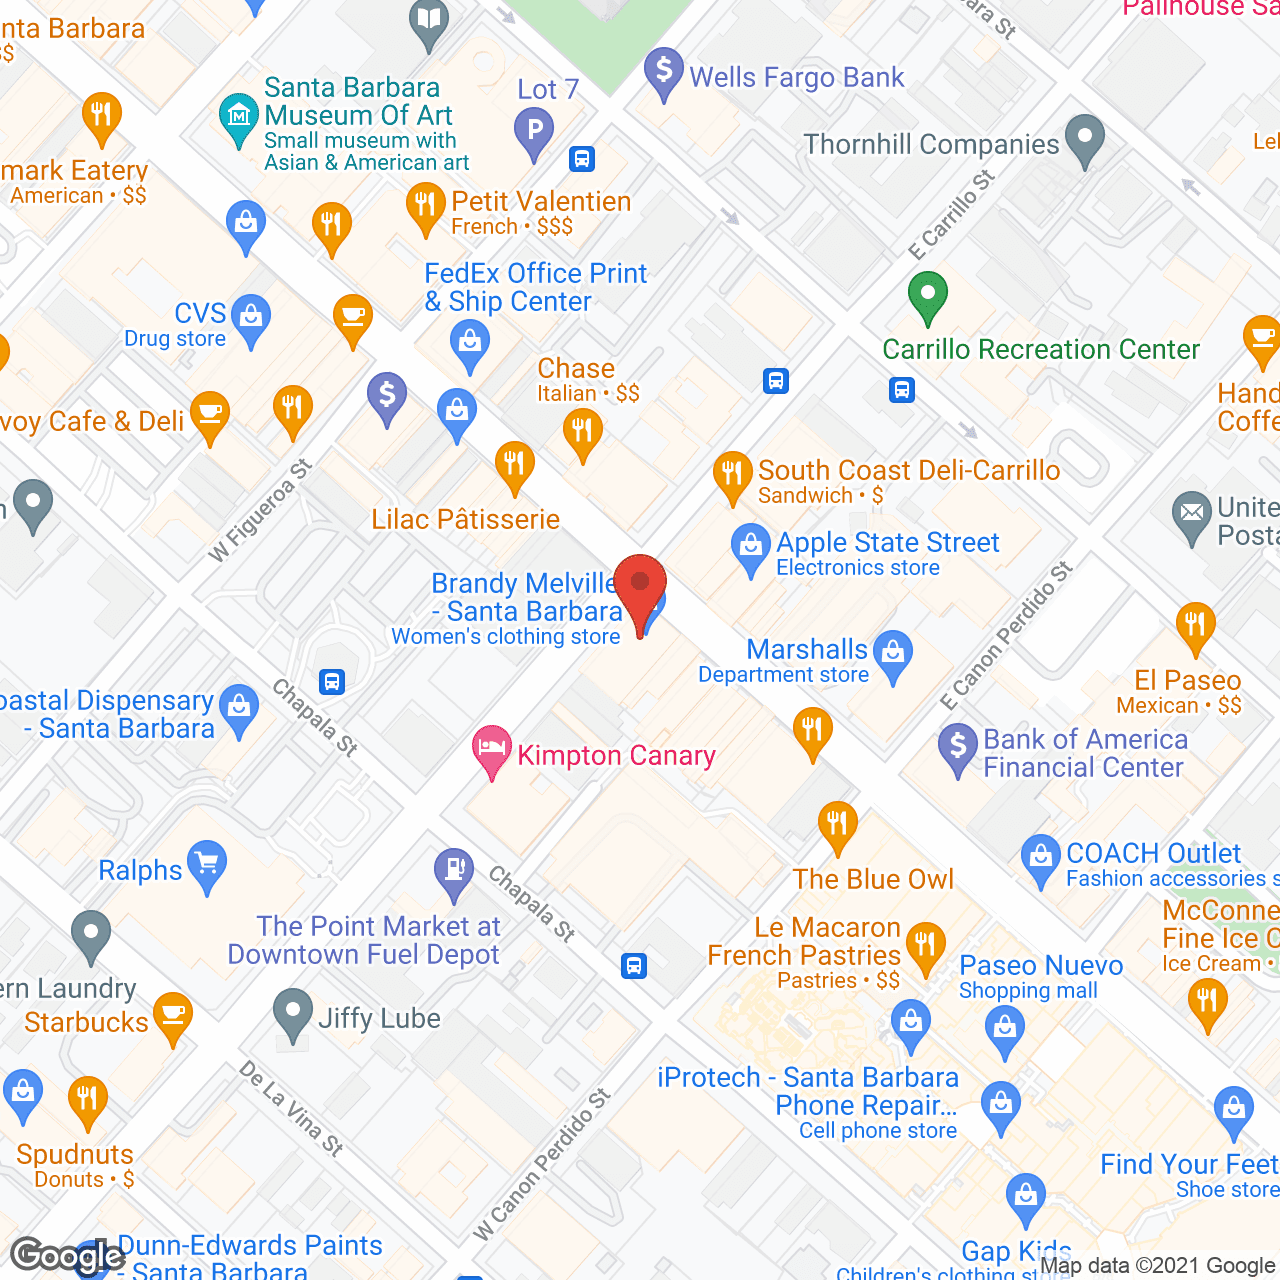 Astera Care in google map